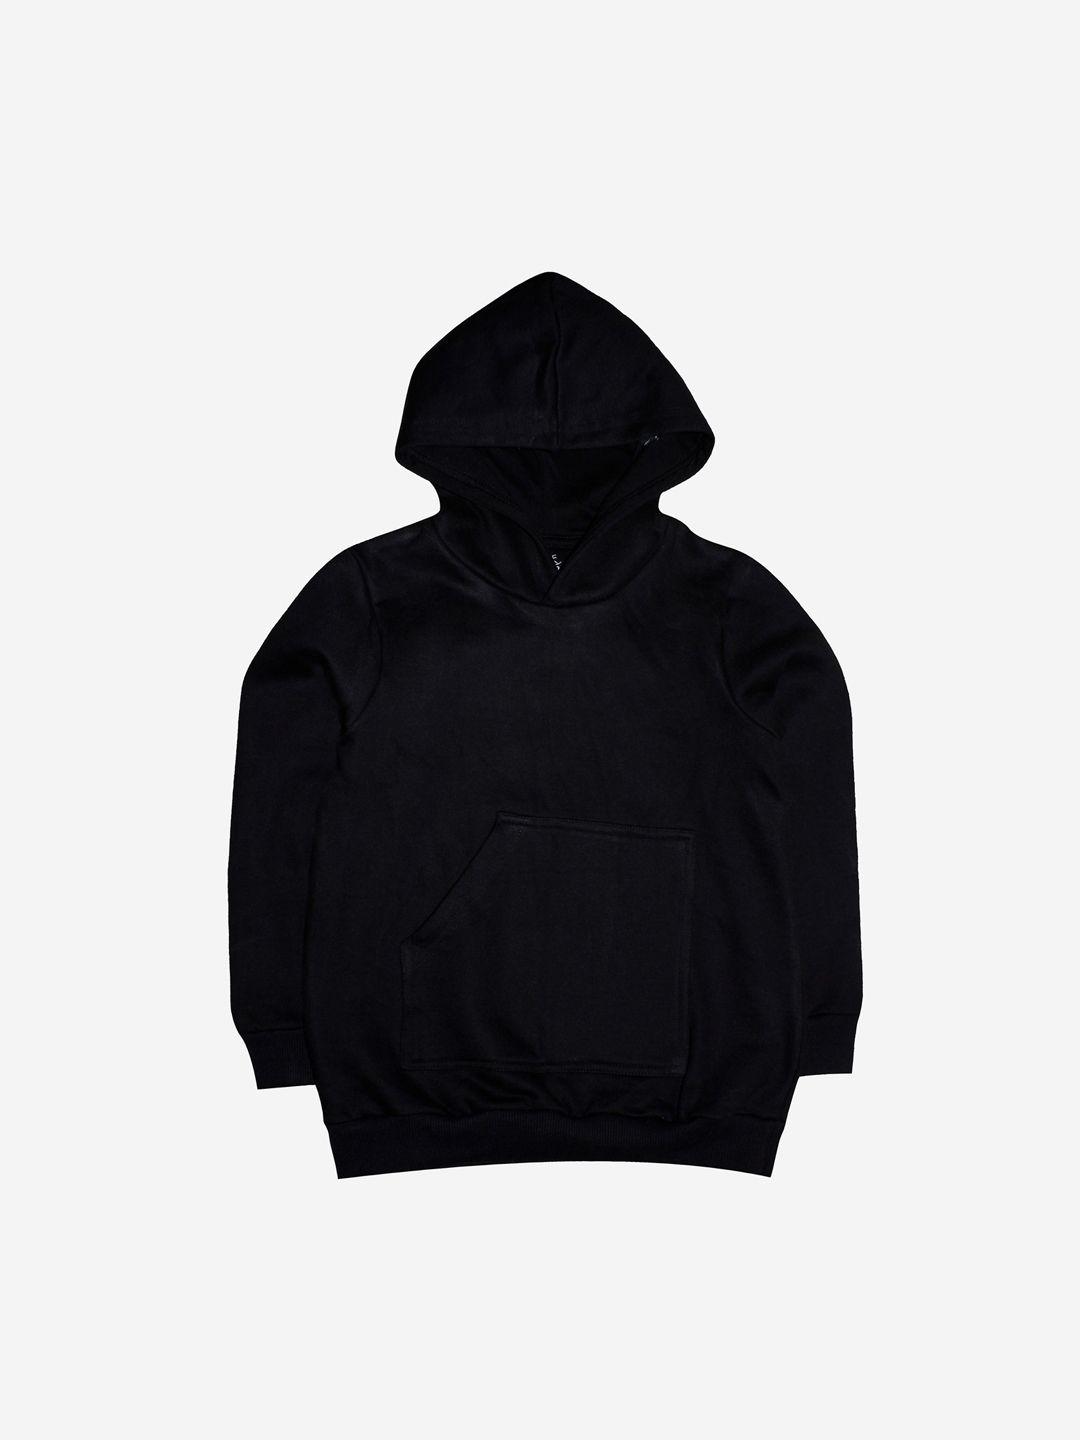 kiddopanti unisex kids black hooded cotton sweatshirt